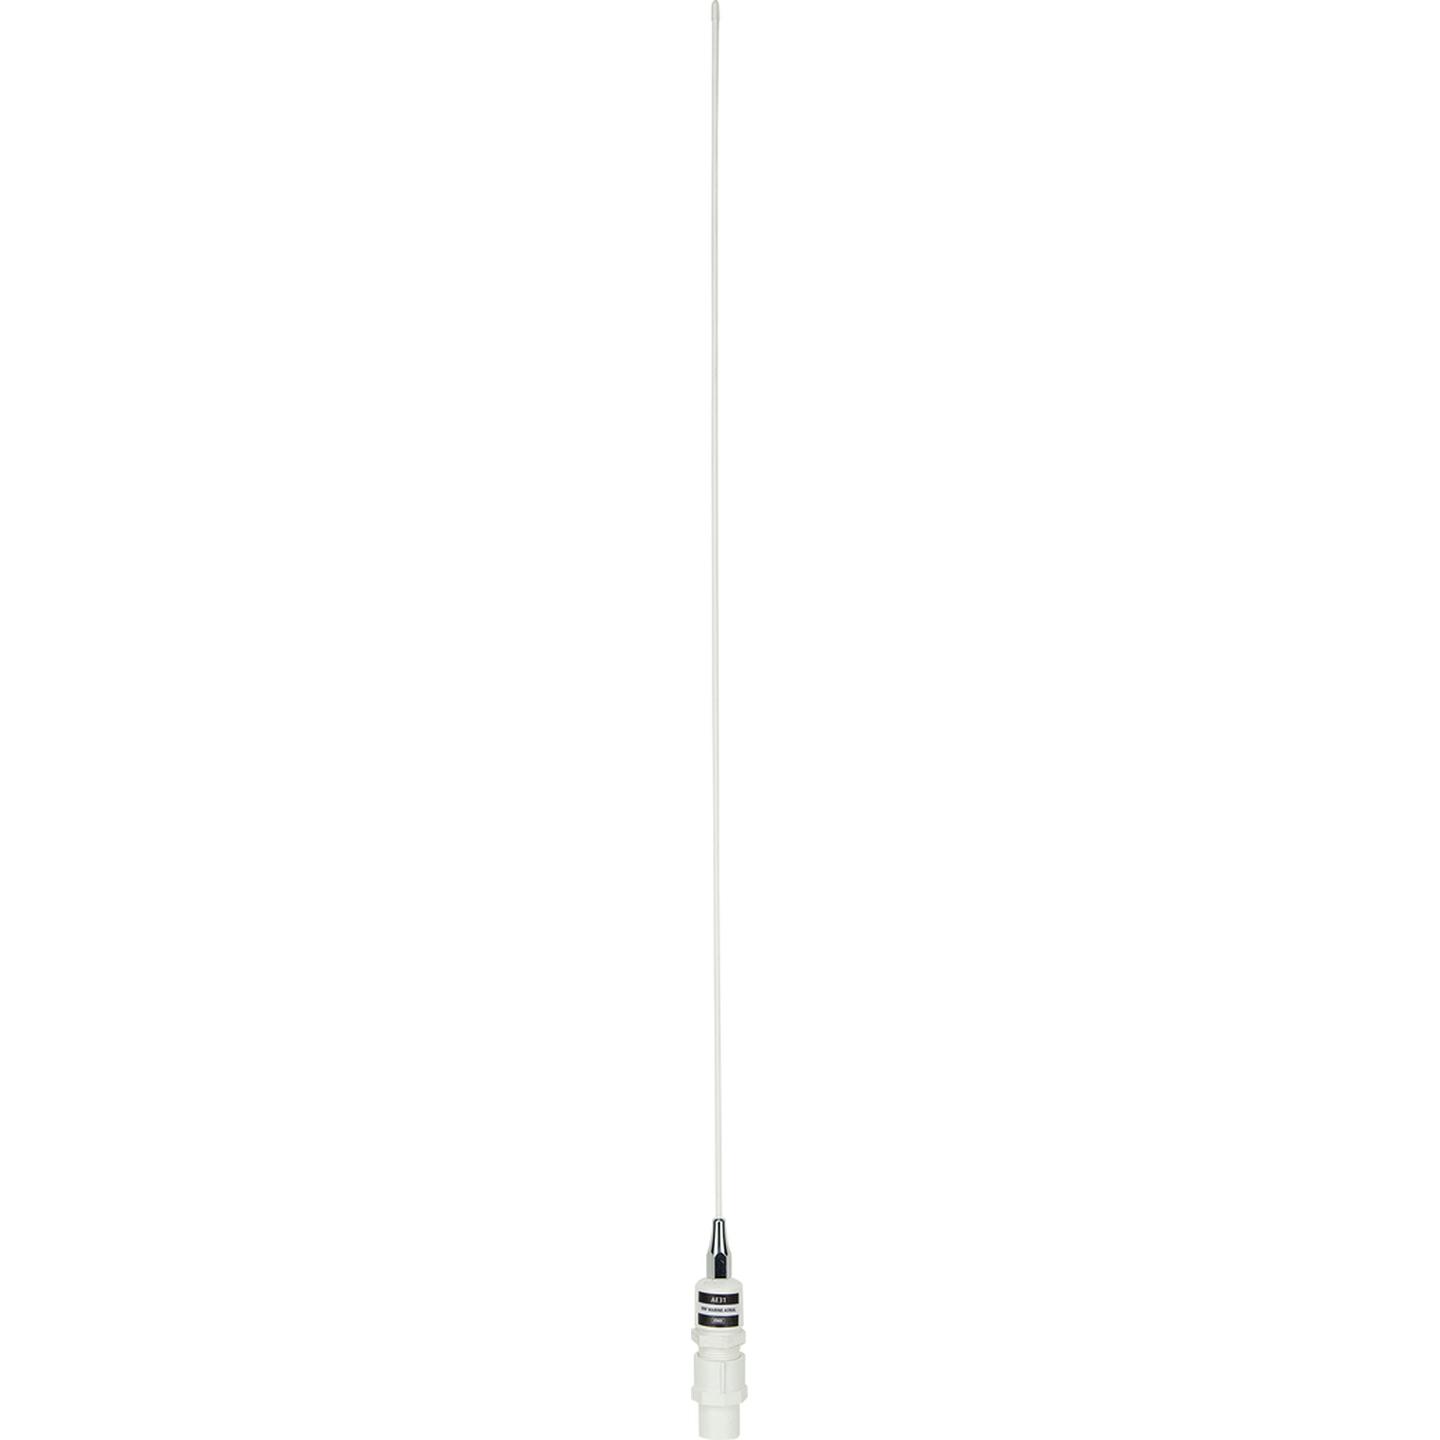 850mm VHF Mast Mount Antenna - White